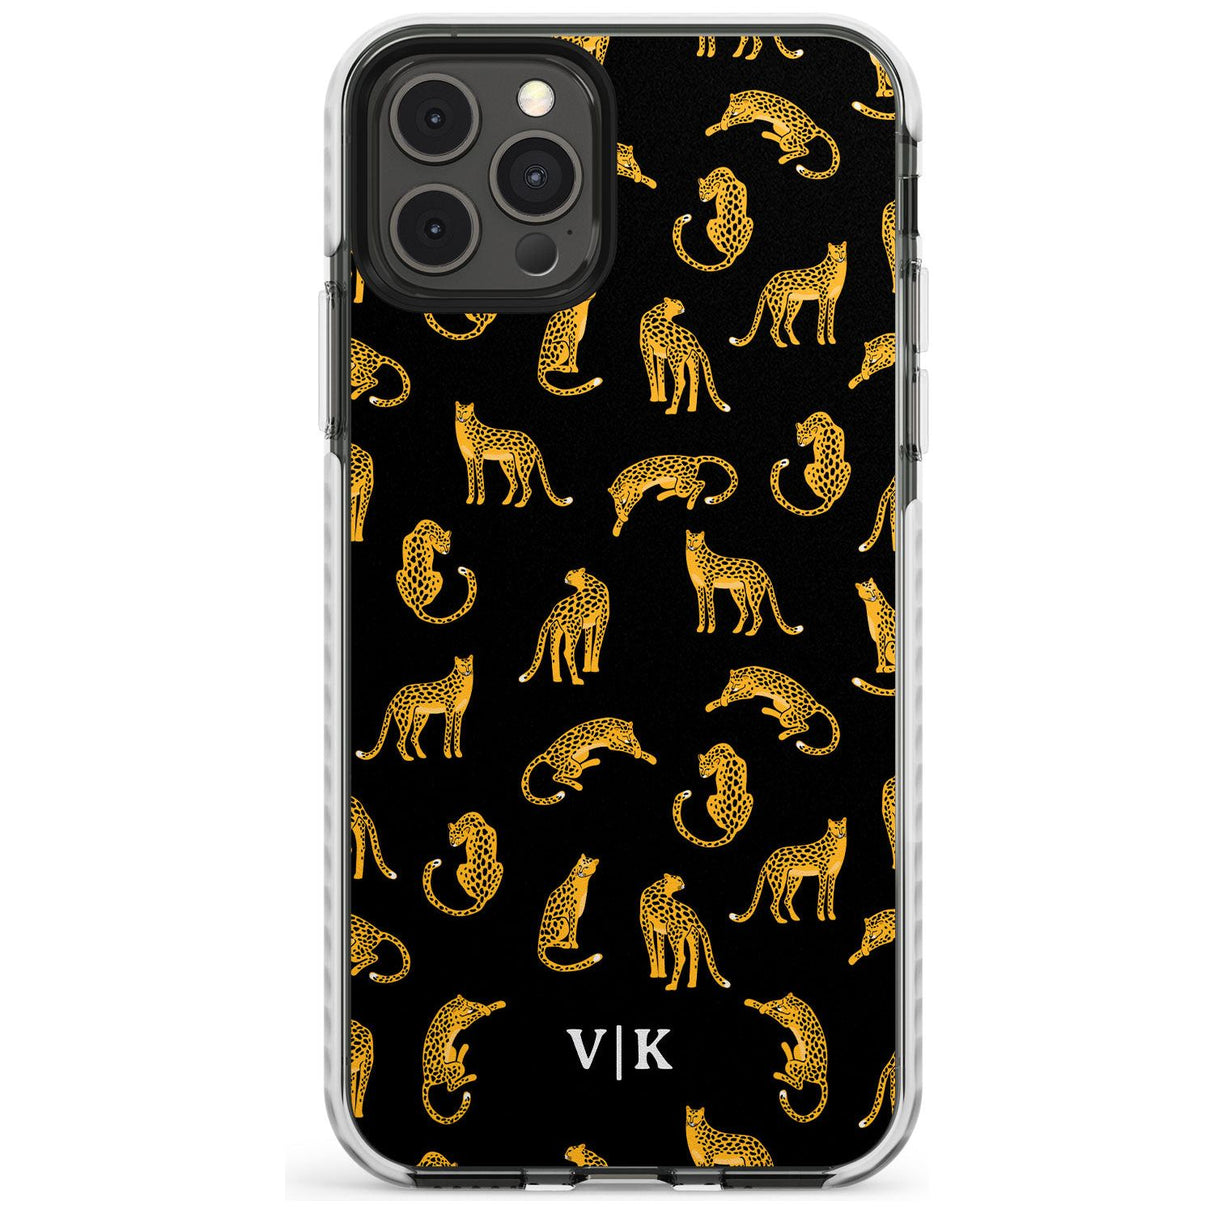 Personalised Cheetah Pattern: Black Slim TPU Phone Case for iPhone 11 Pro Max